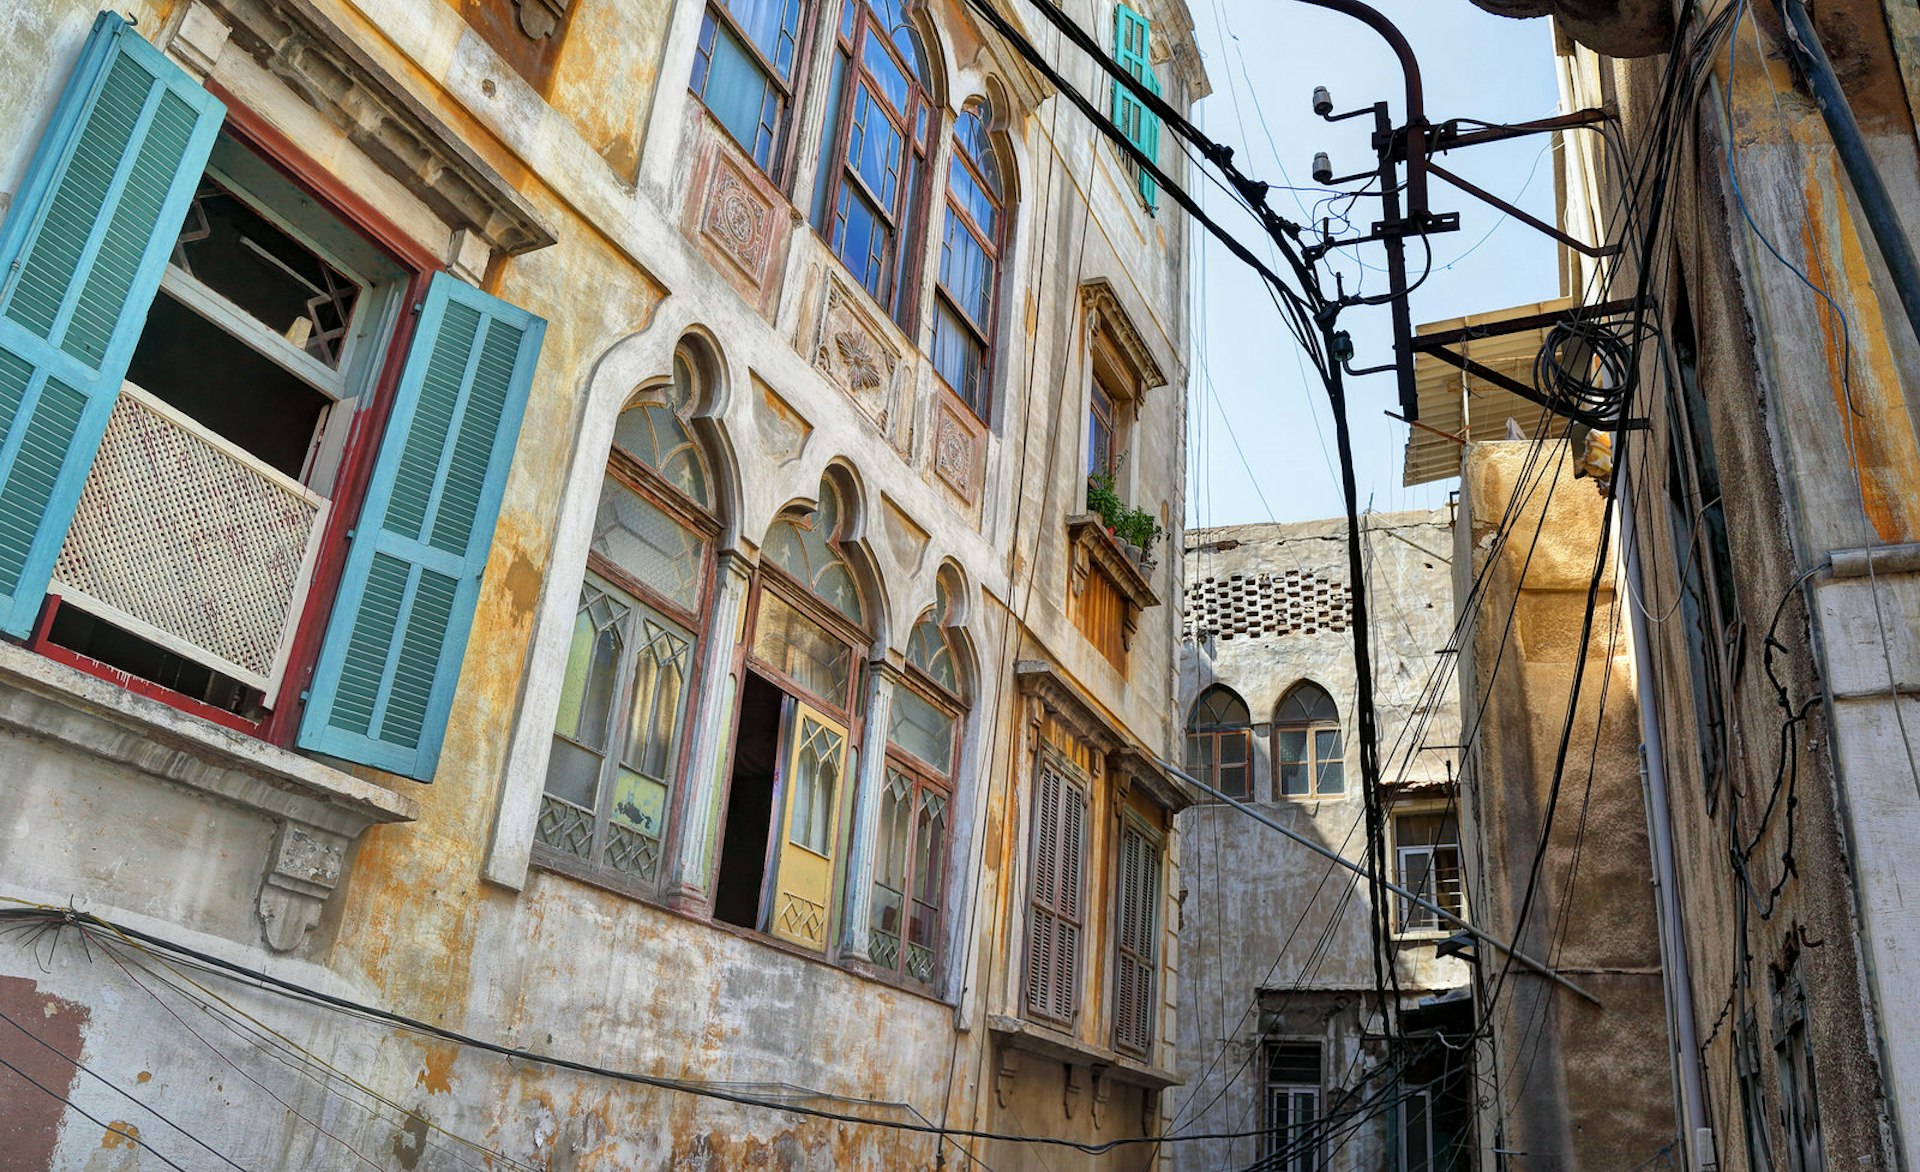 The alleyways of old Tripoli, Lebanon © diak / Shutterstock